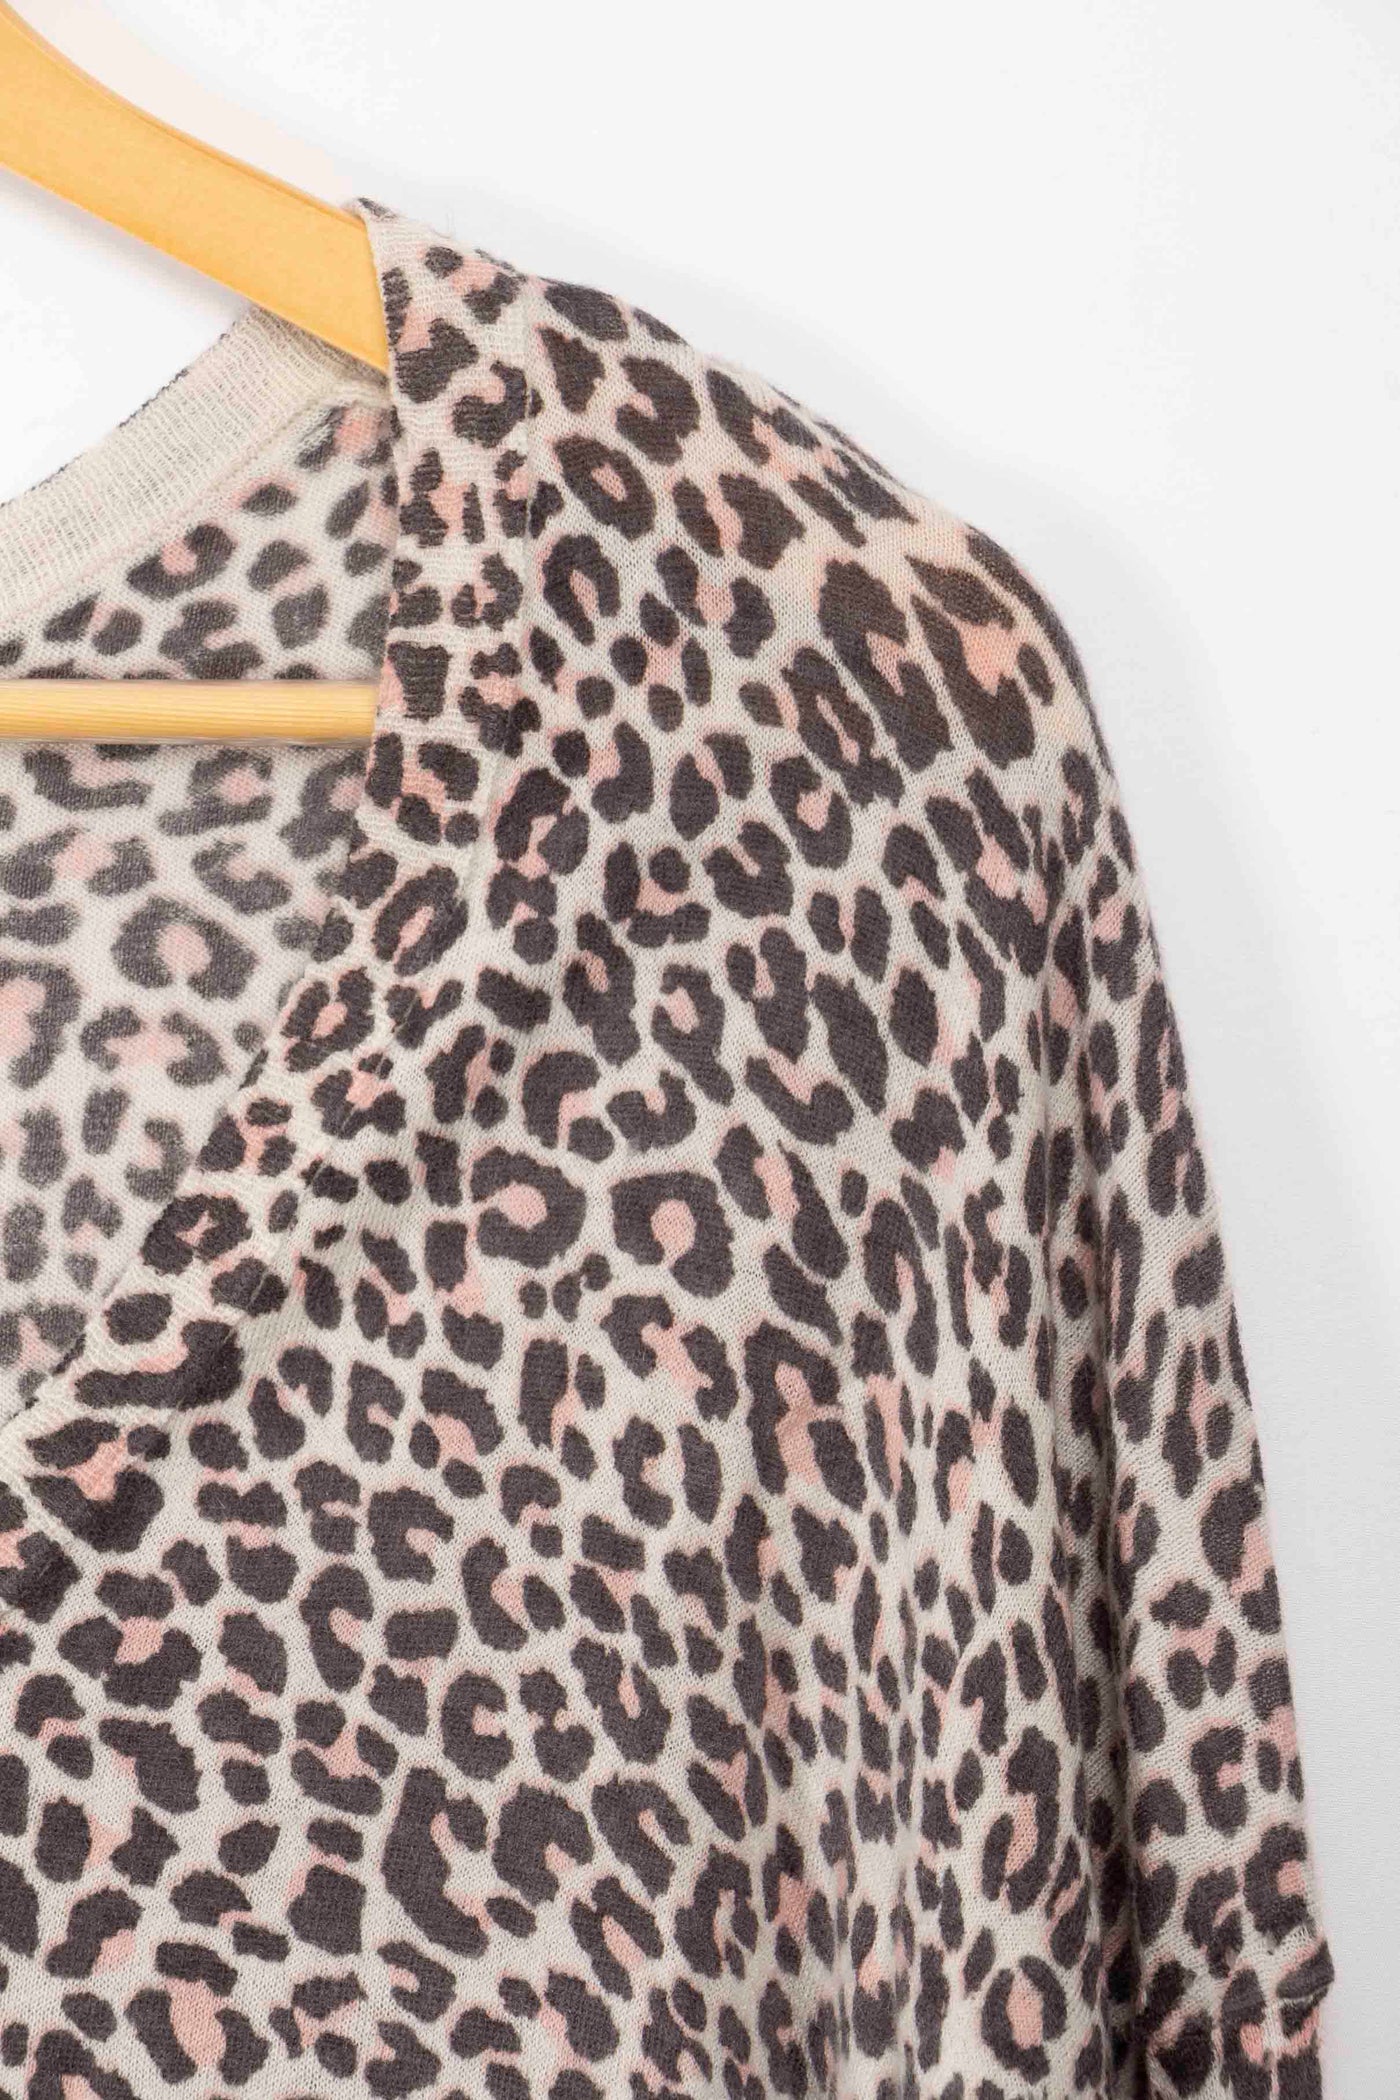 Zadig&amp;Voltaire leopard pattern sweater - S